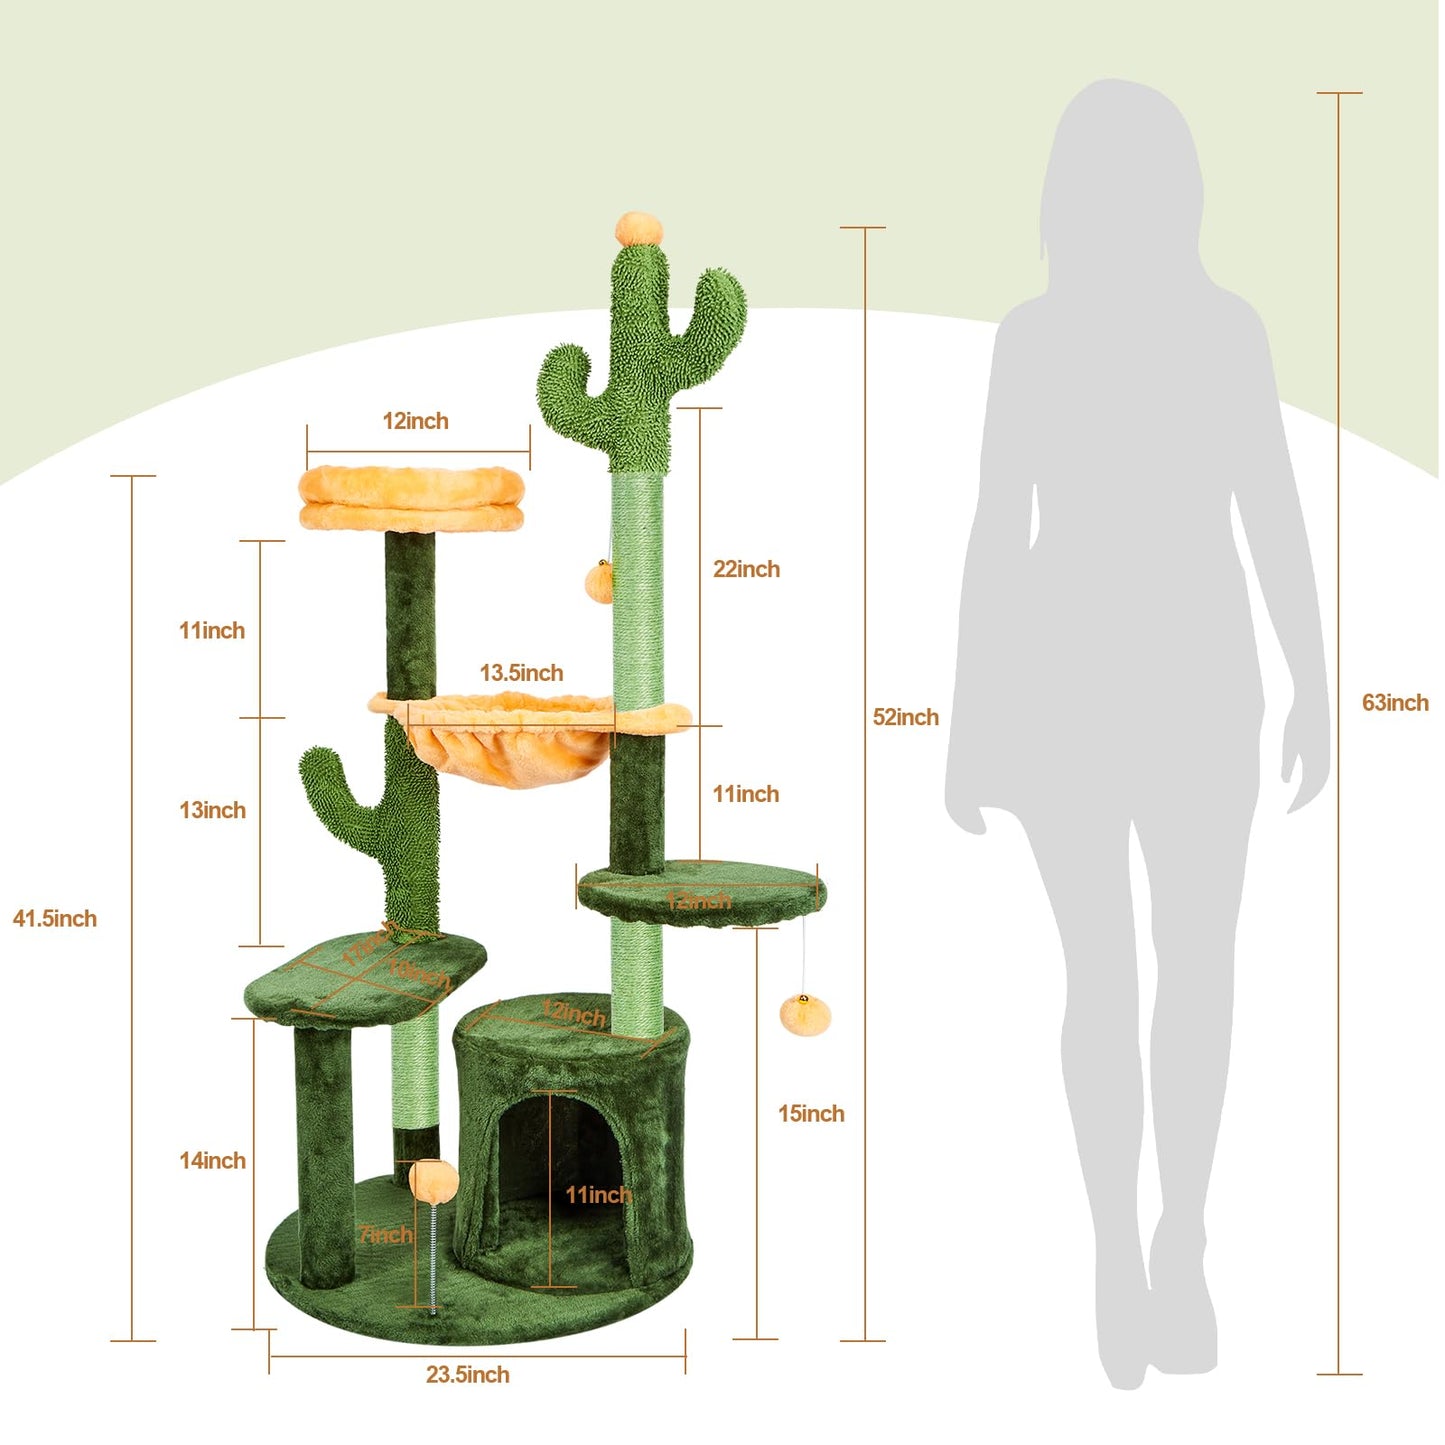 Cactus Cat Tree - 52” Tall